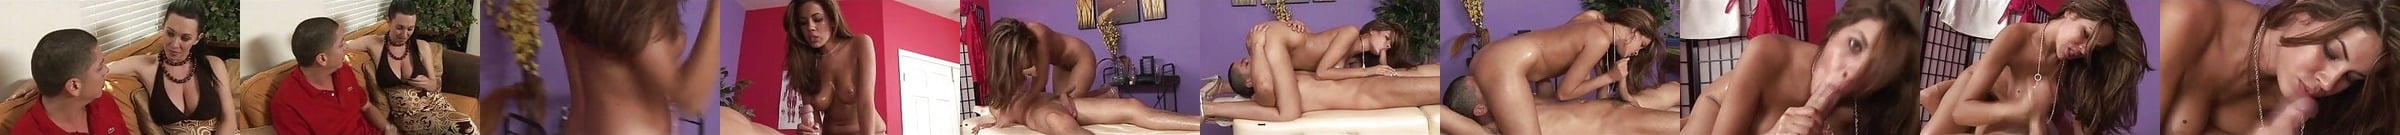 Massage Parlor Porn Videos Oiled Handjobs Xhamster